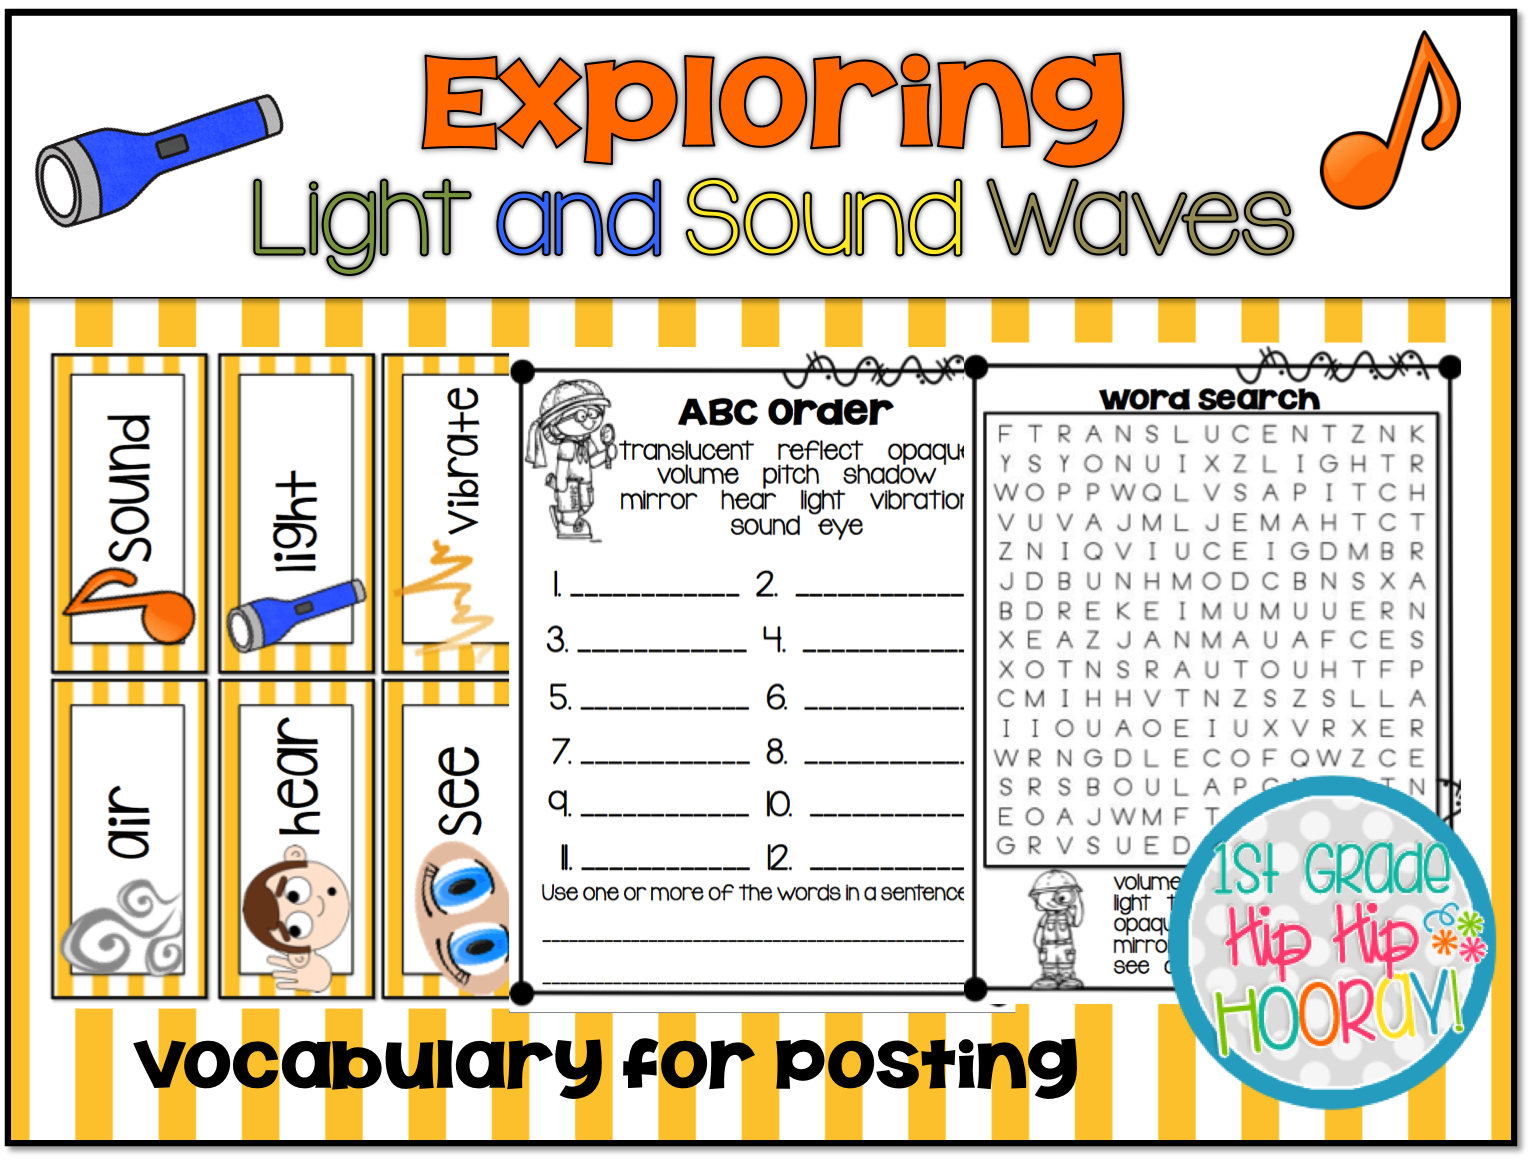 1st-grade-hip-hip-hooray-exploring-light-and-sound-waves